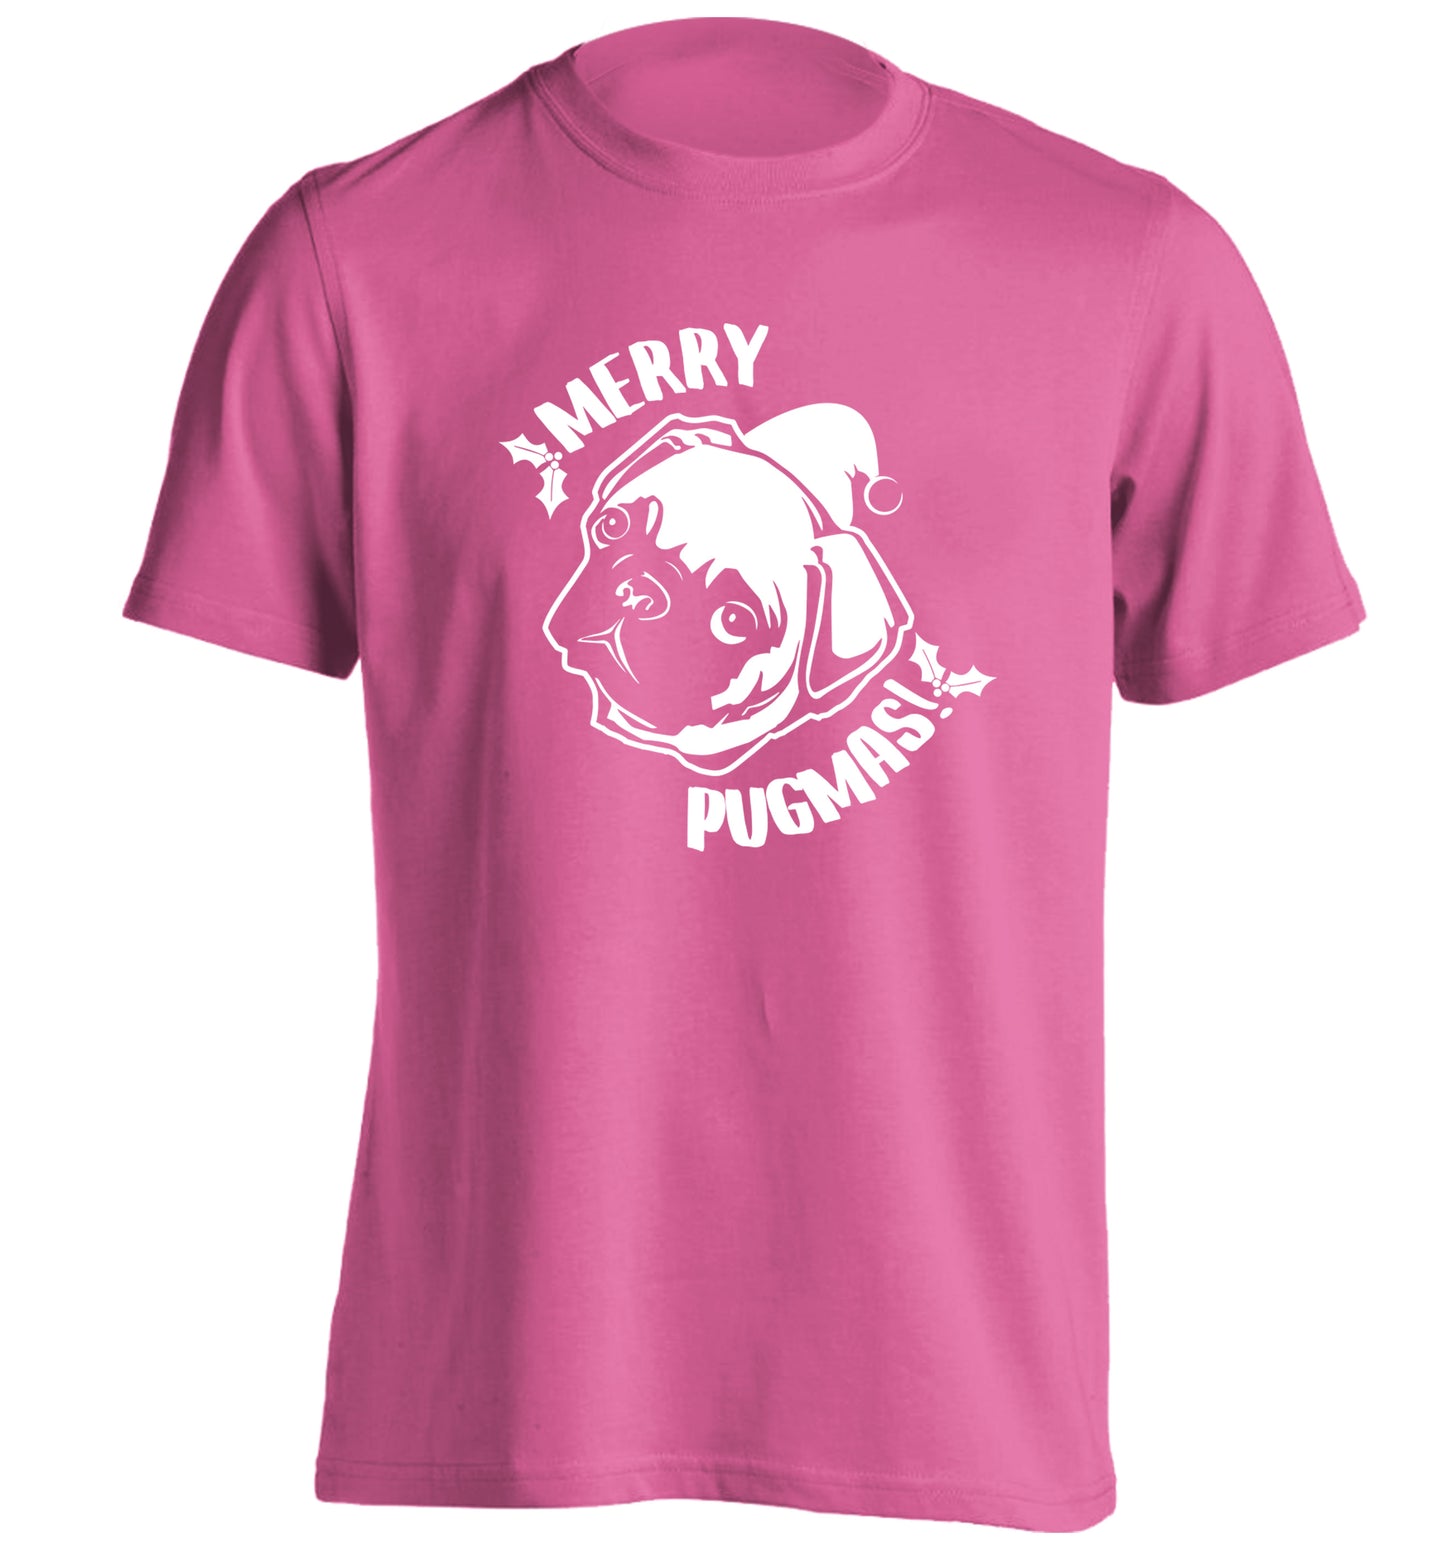 Merry Pugmas adults unisex pink Tshirt 2XL